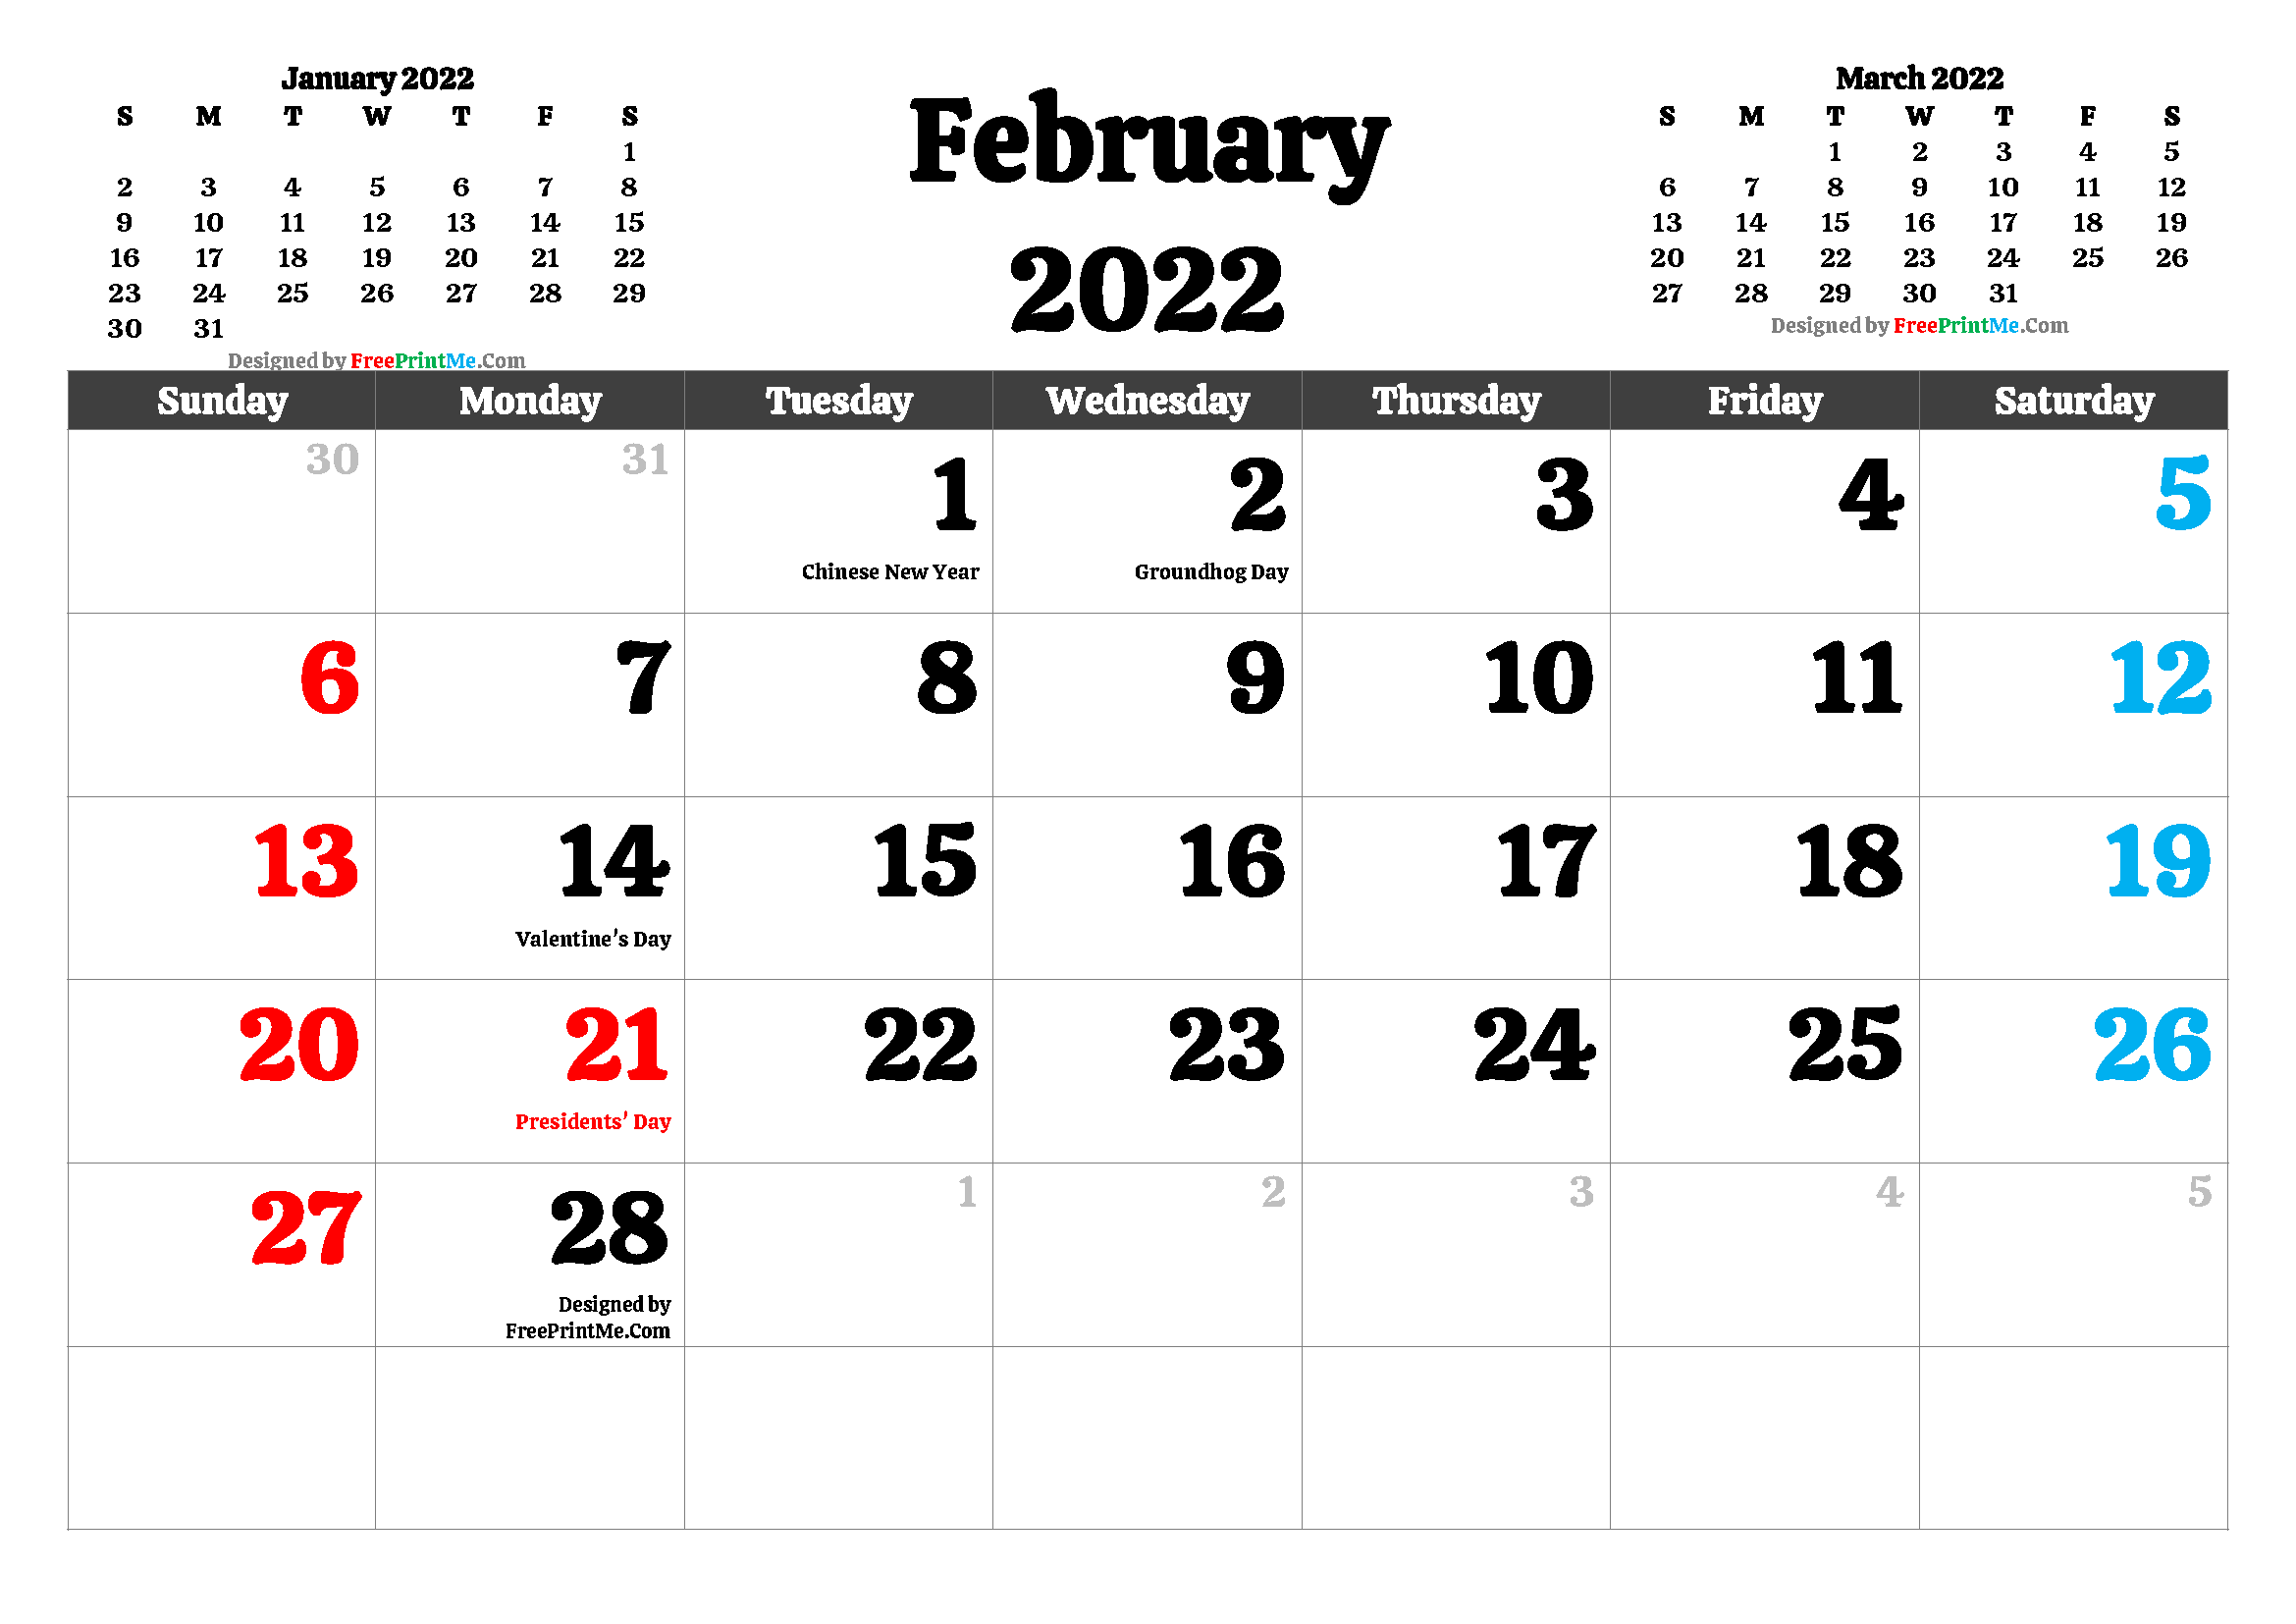 Feb 2022 Holiday Calendar Free Printable February 2022 Calendar Pdf And Image